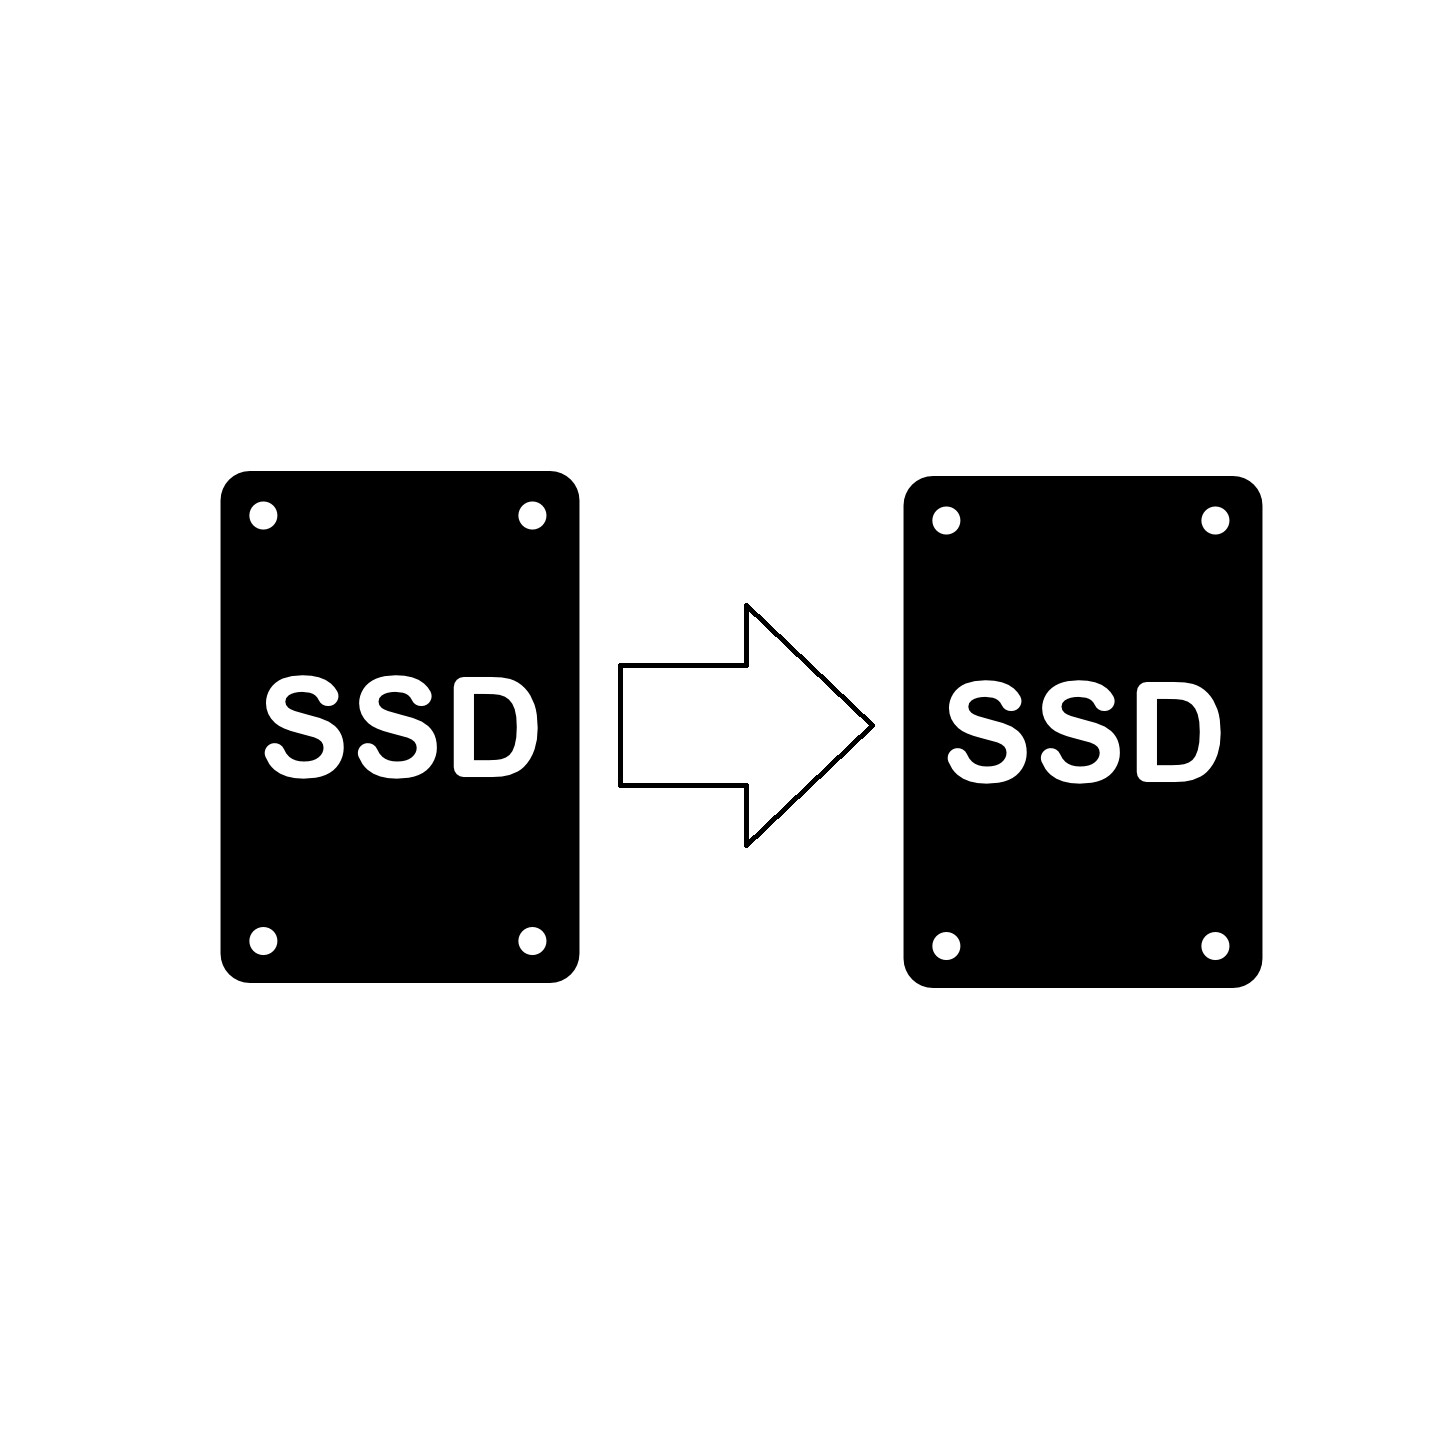 KLONIRANJE SA SSD-a NA SSD